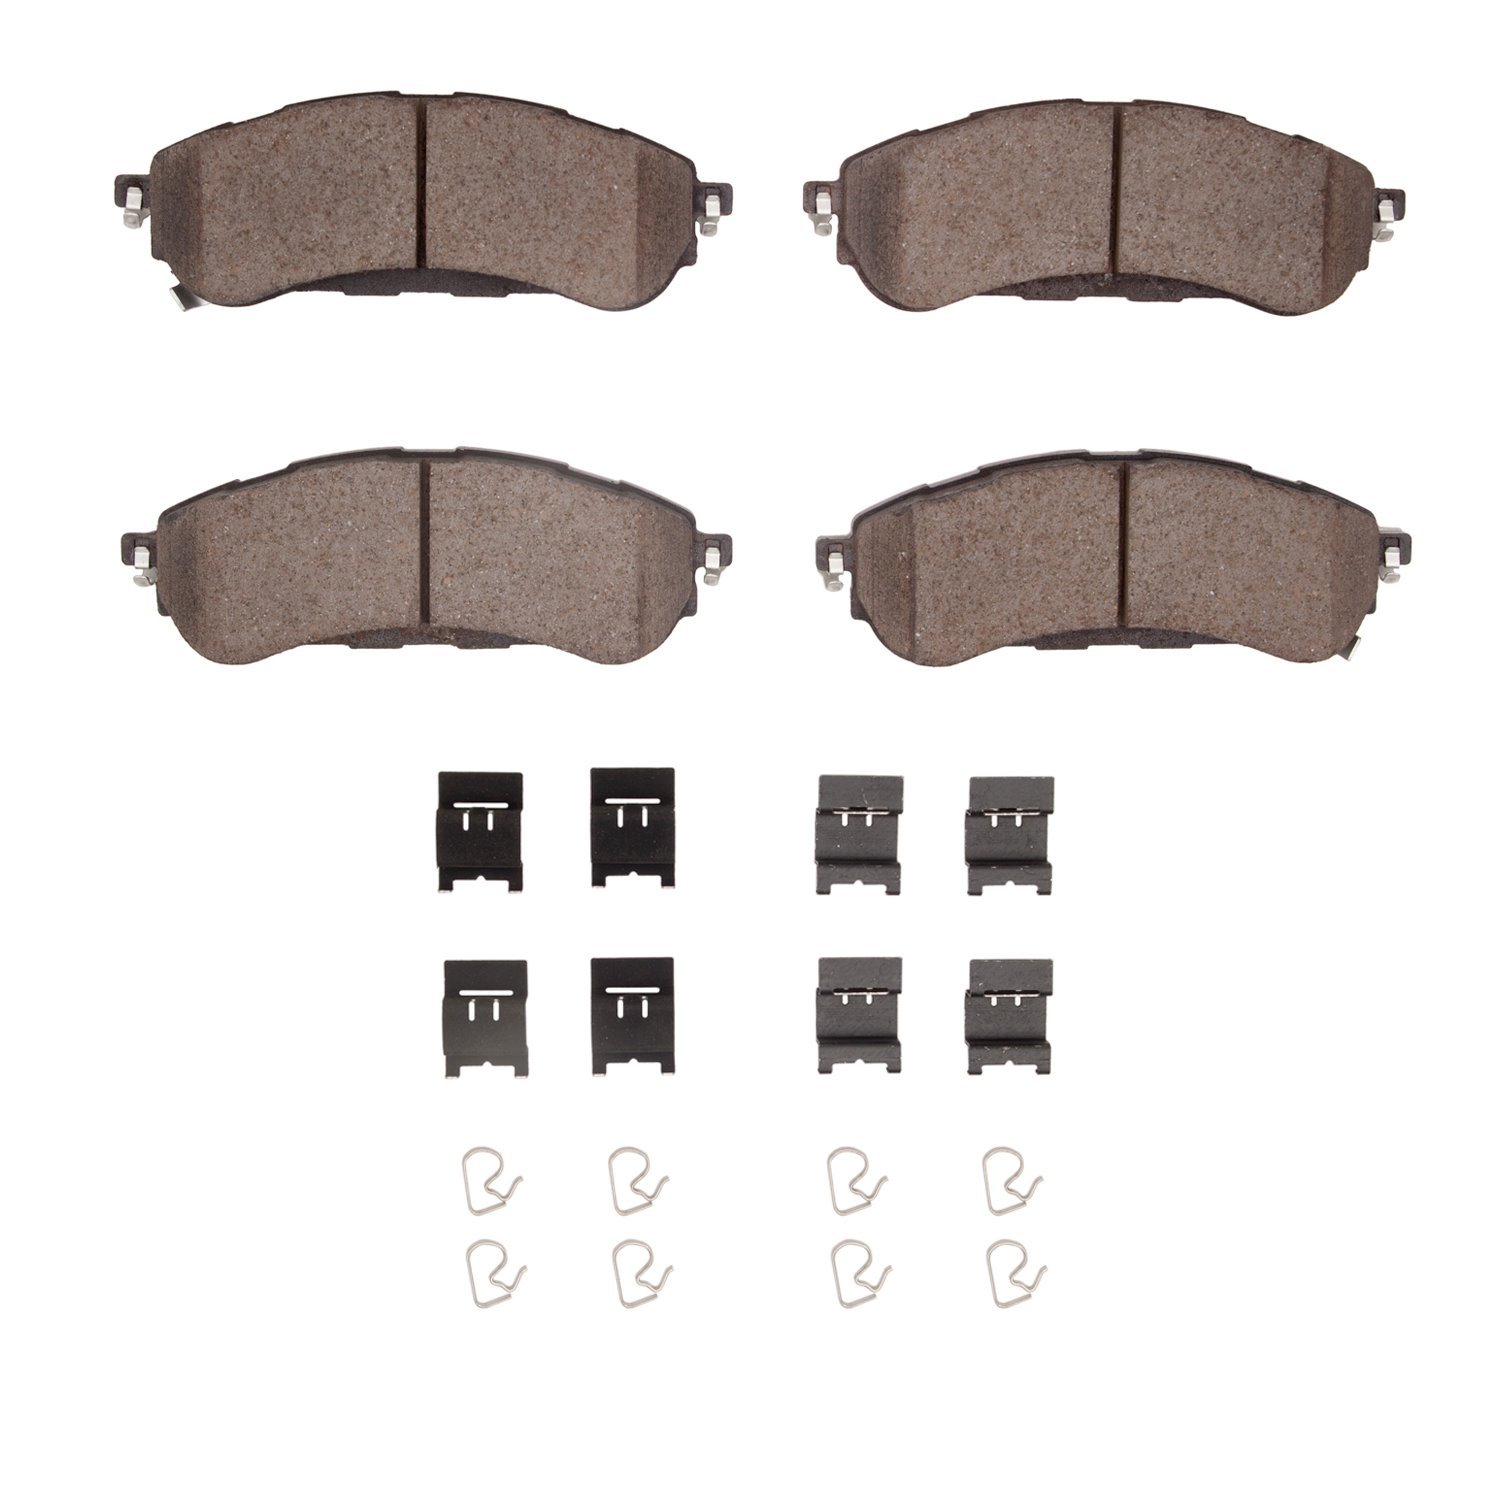 1551-2208-01 5000 Advanced Ceramic Brake Pads & Hardware Kit, Fits Select Ford/Lincoln/Mercury/Mazda, Position: Rear